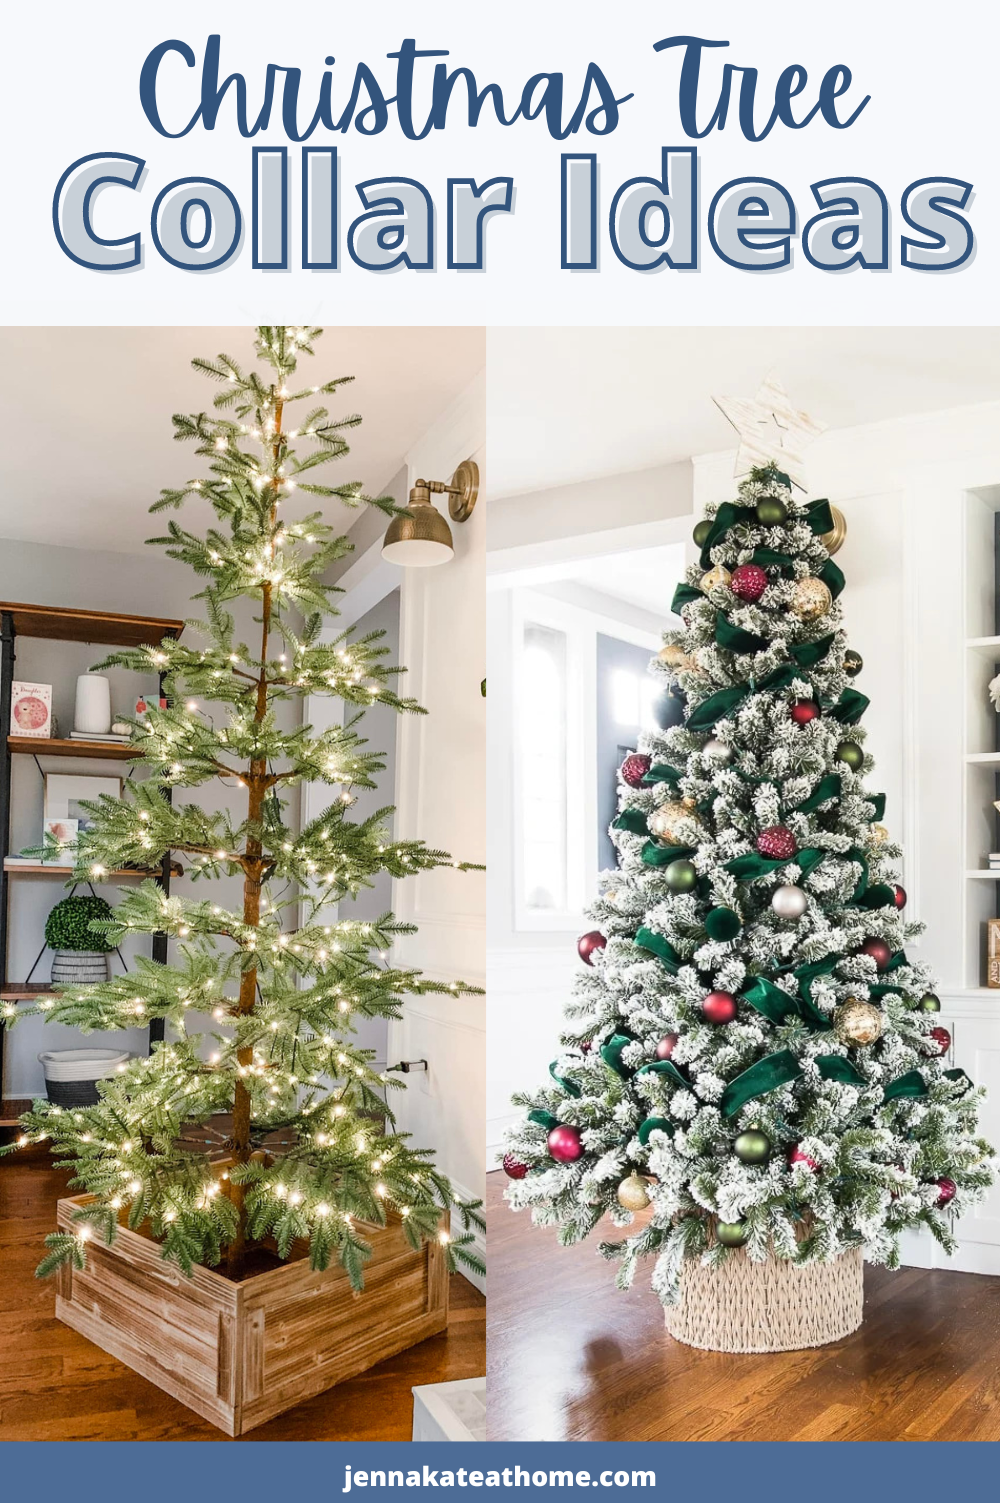 24 Christmas tree collar ideas